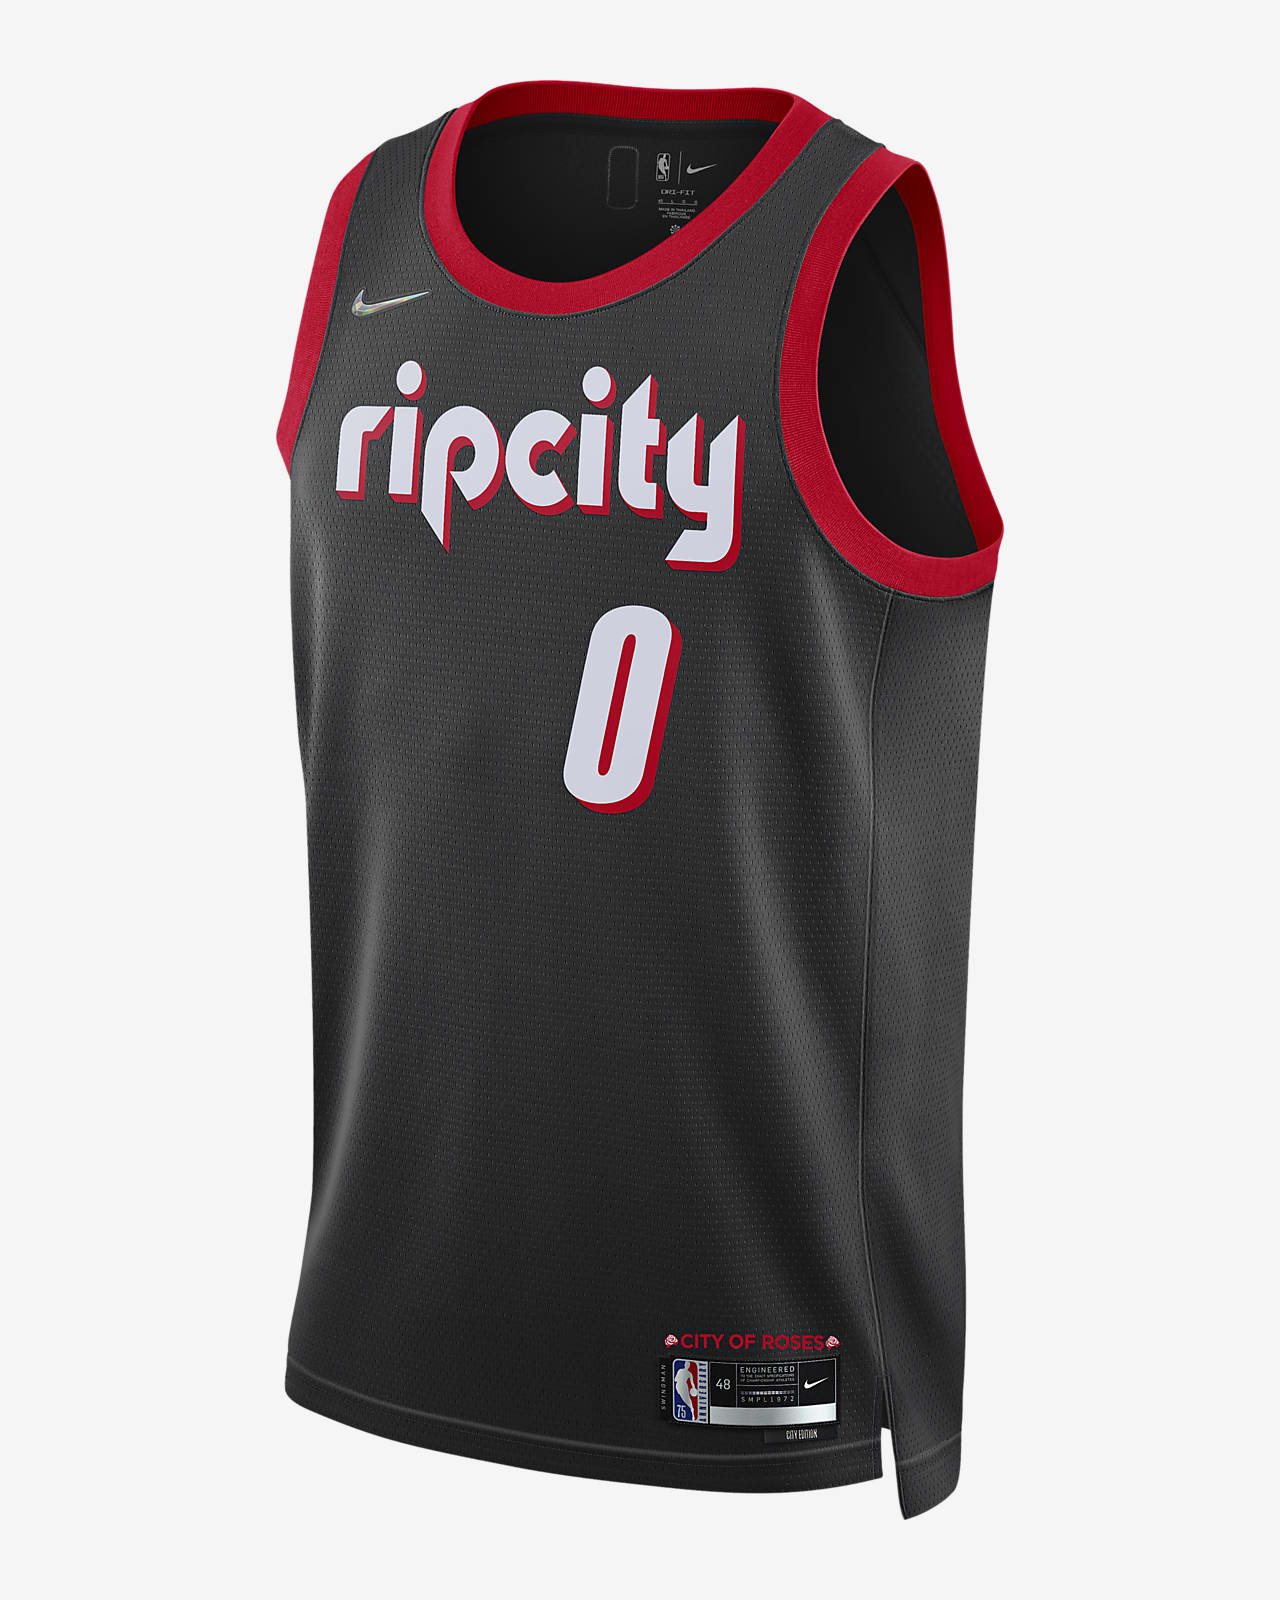 Portland Trail Blazers unveil 2021-22 NBA City Edition uniform 